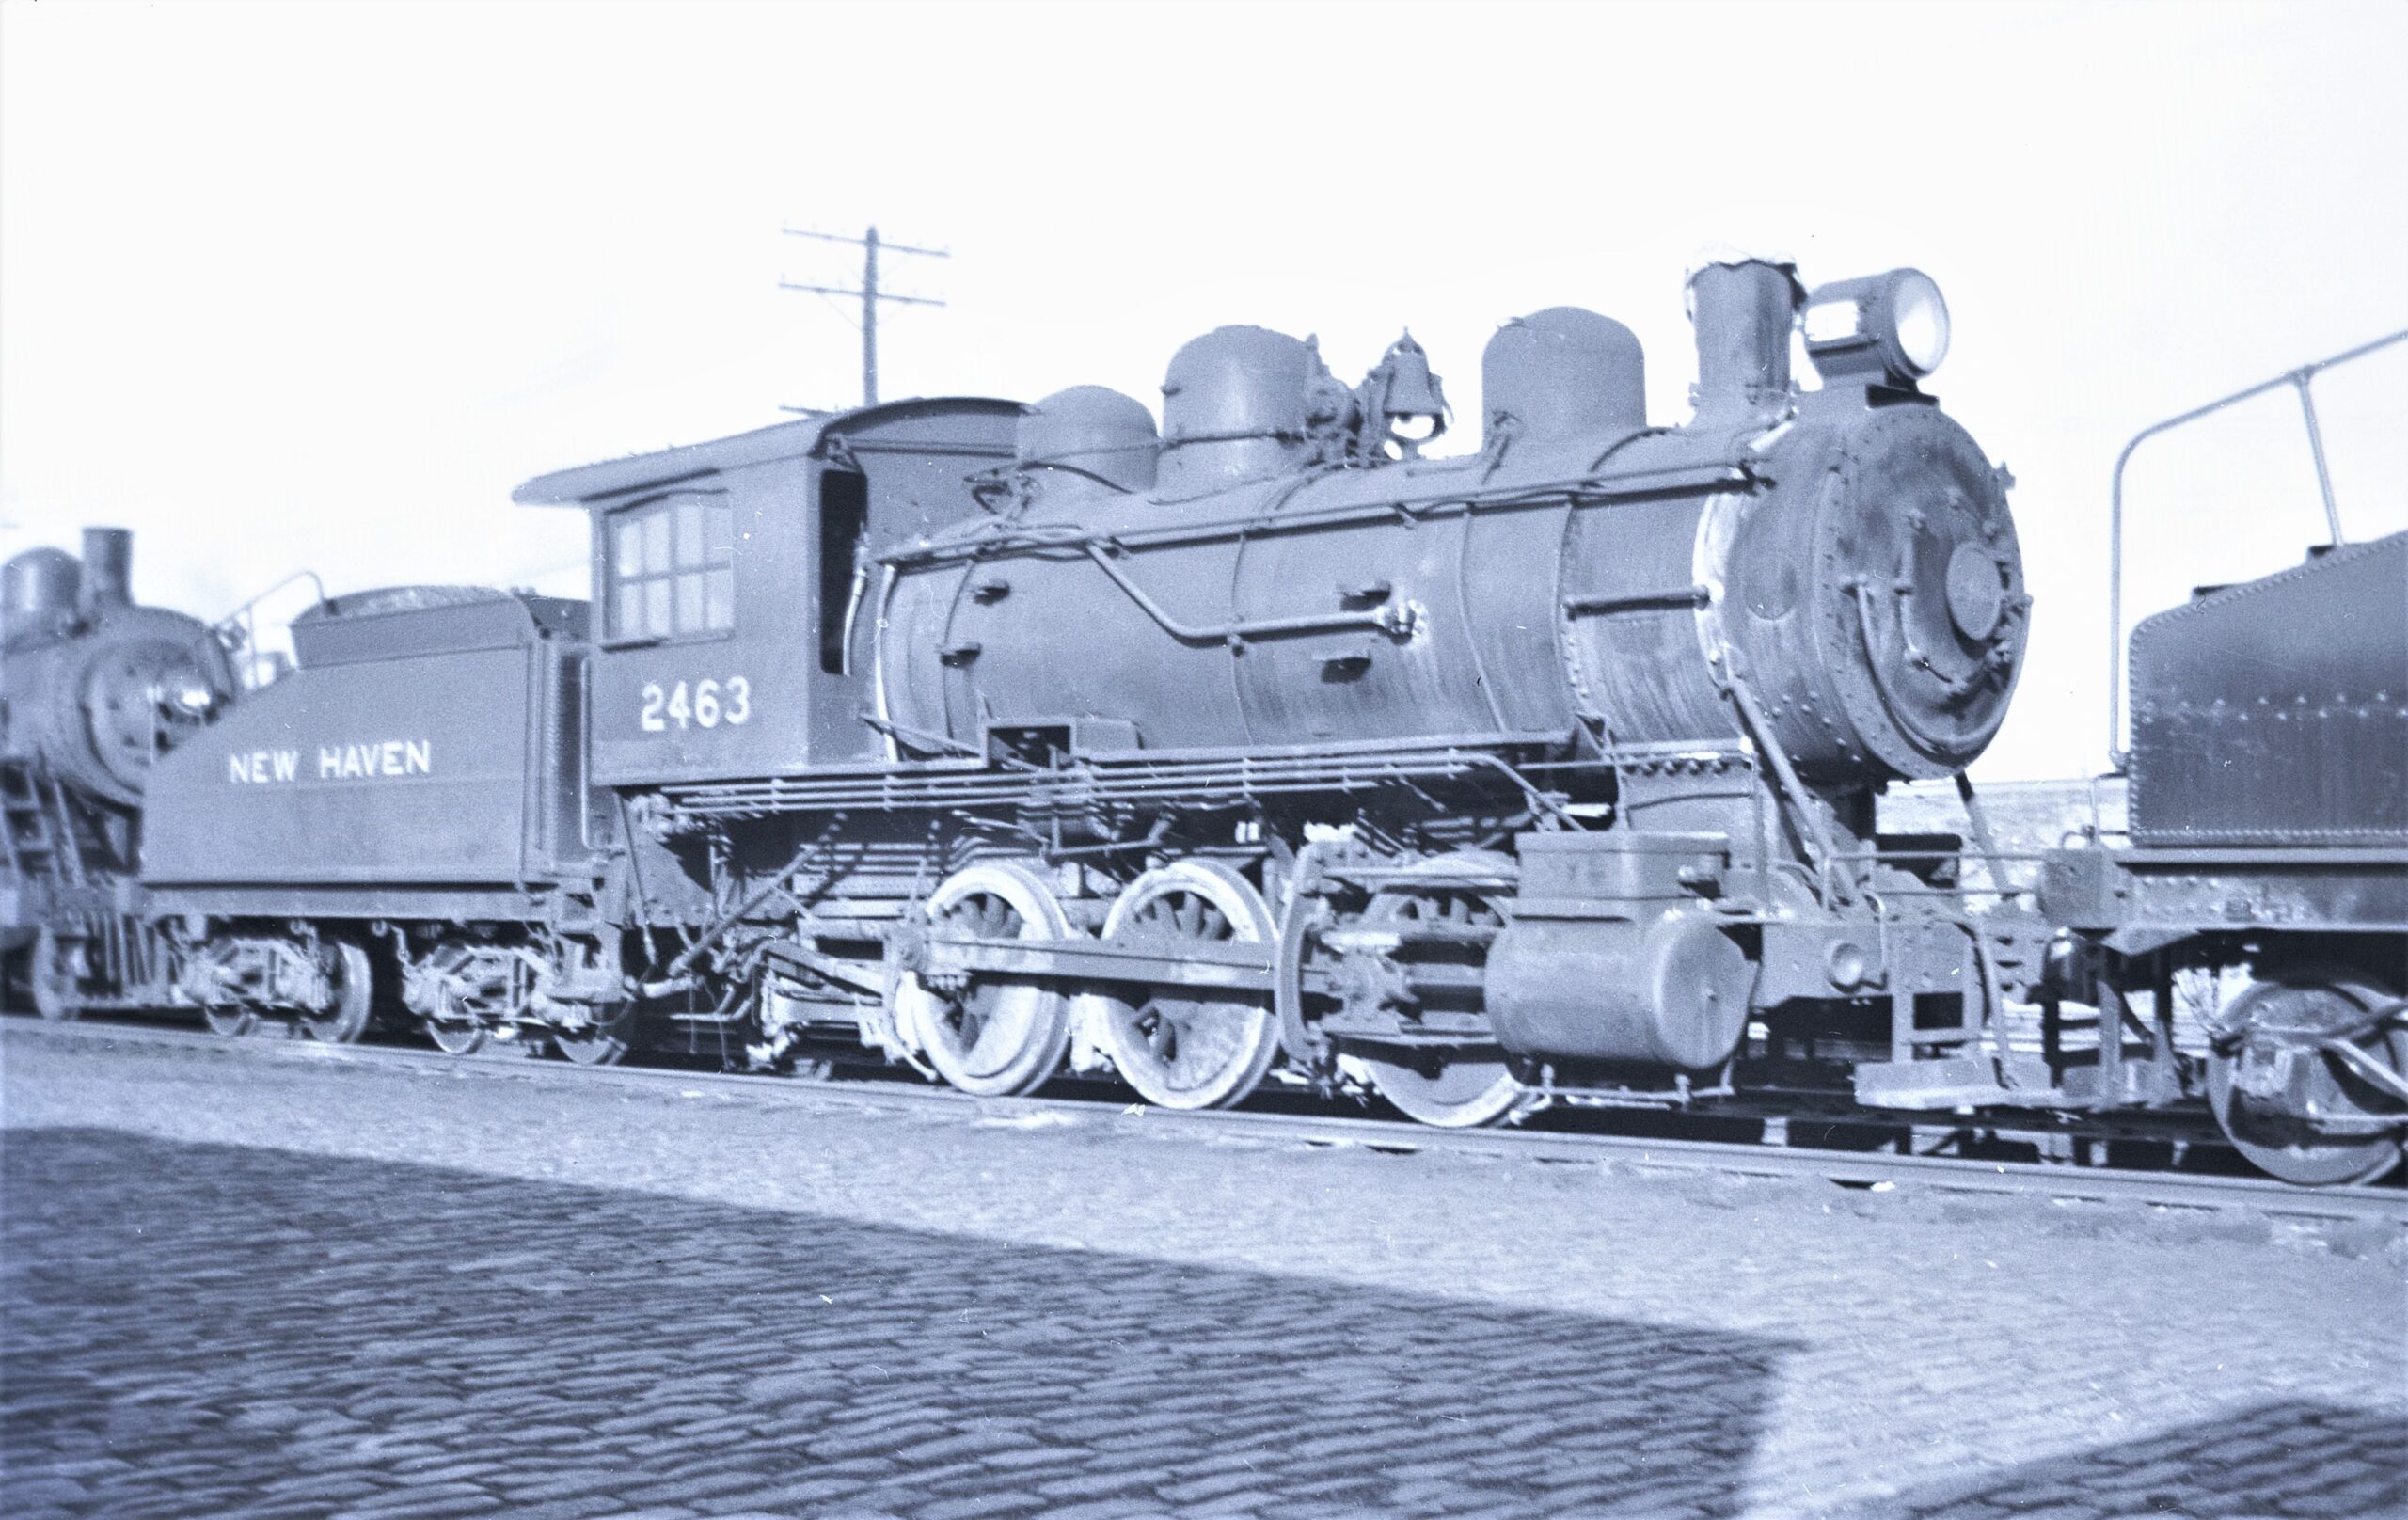 New Haven New York and Hartford Railroad | Boston, Massachusetts | Class T-2b 0-6-0 switcher #2463 steam locomotive | April 1940 | Fielding Lew Bowman photograph